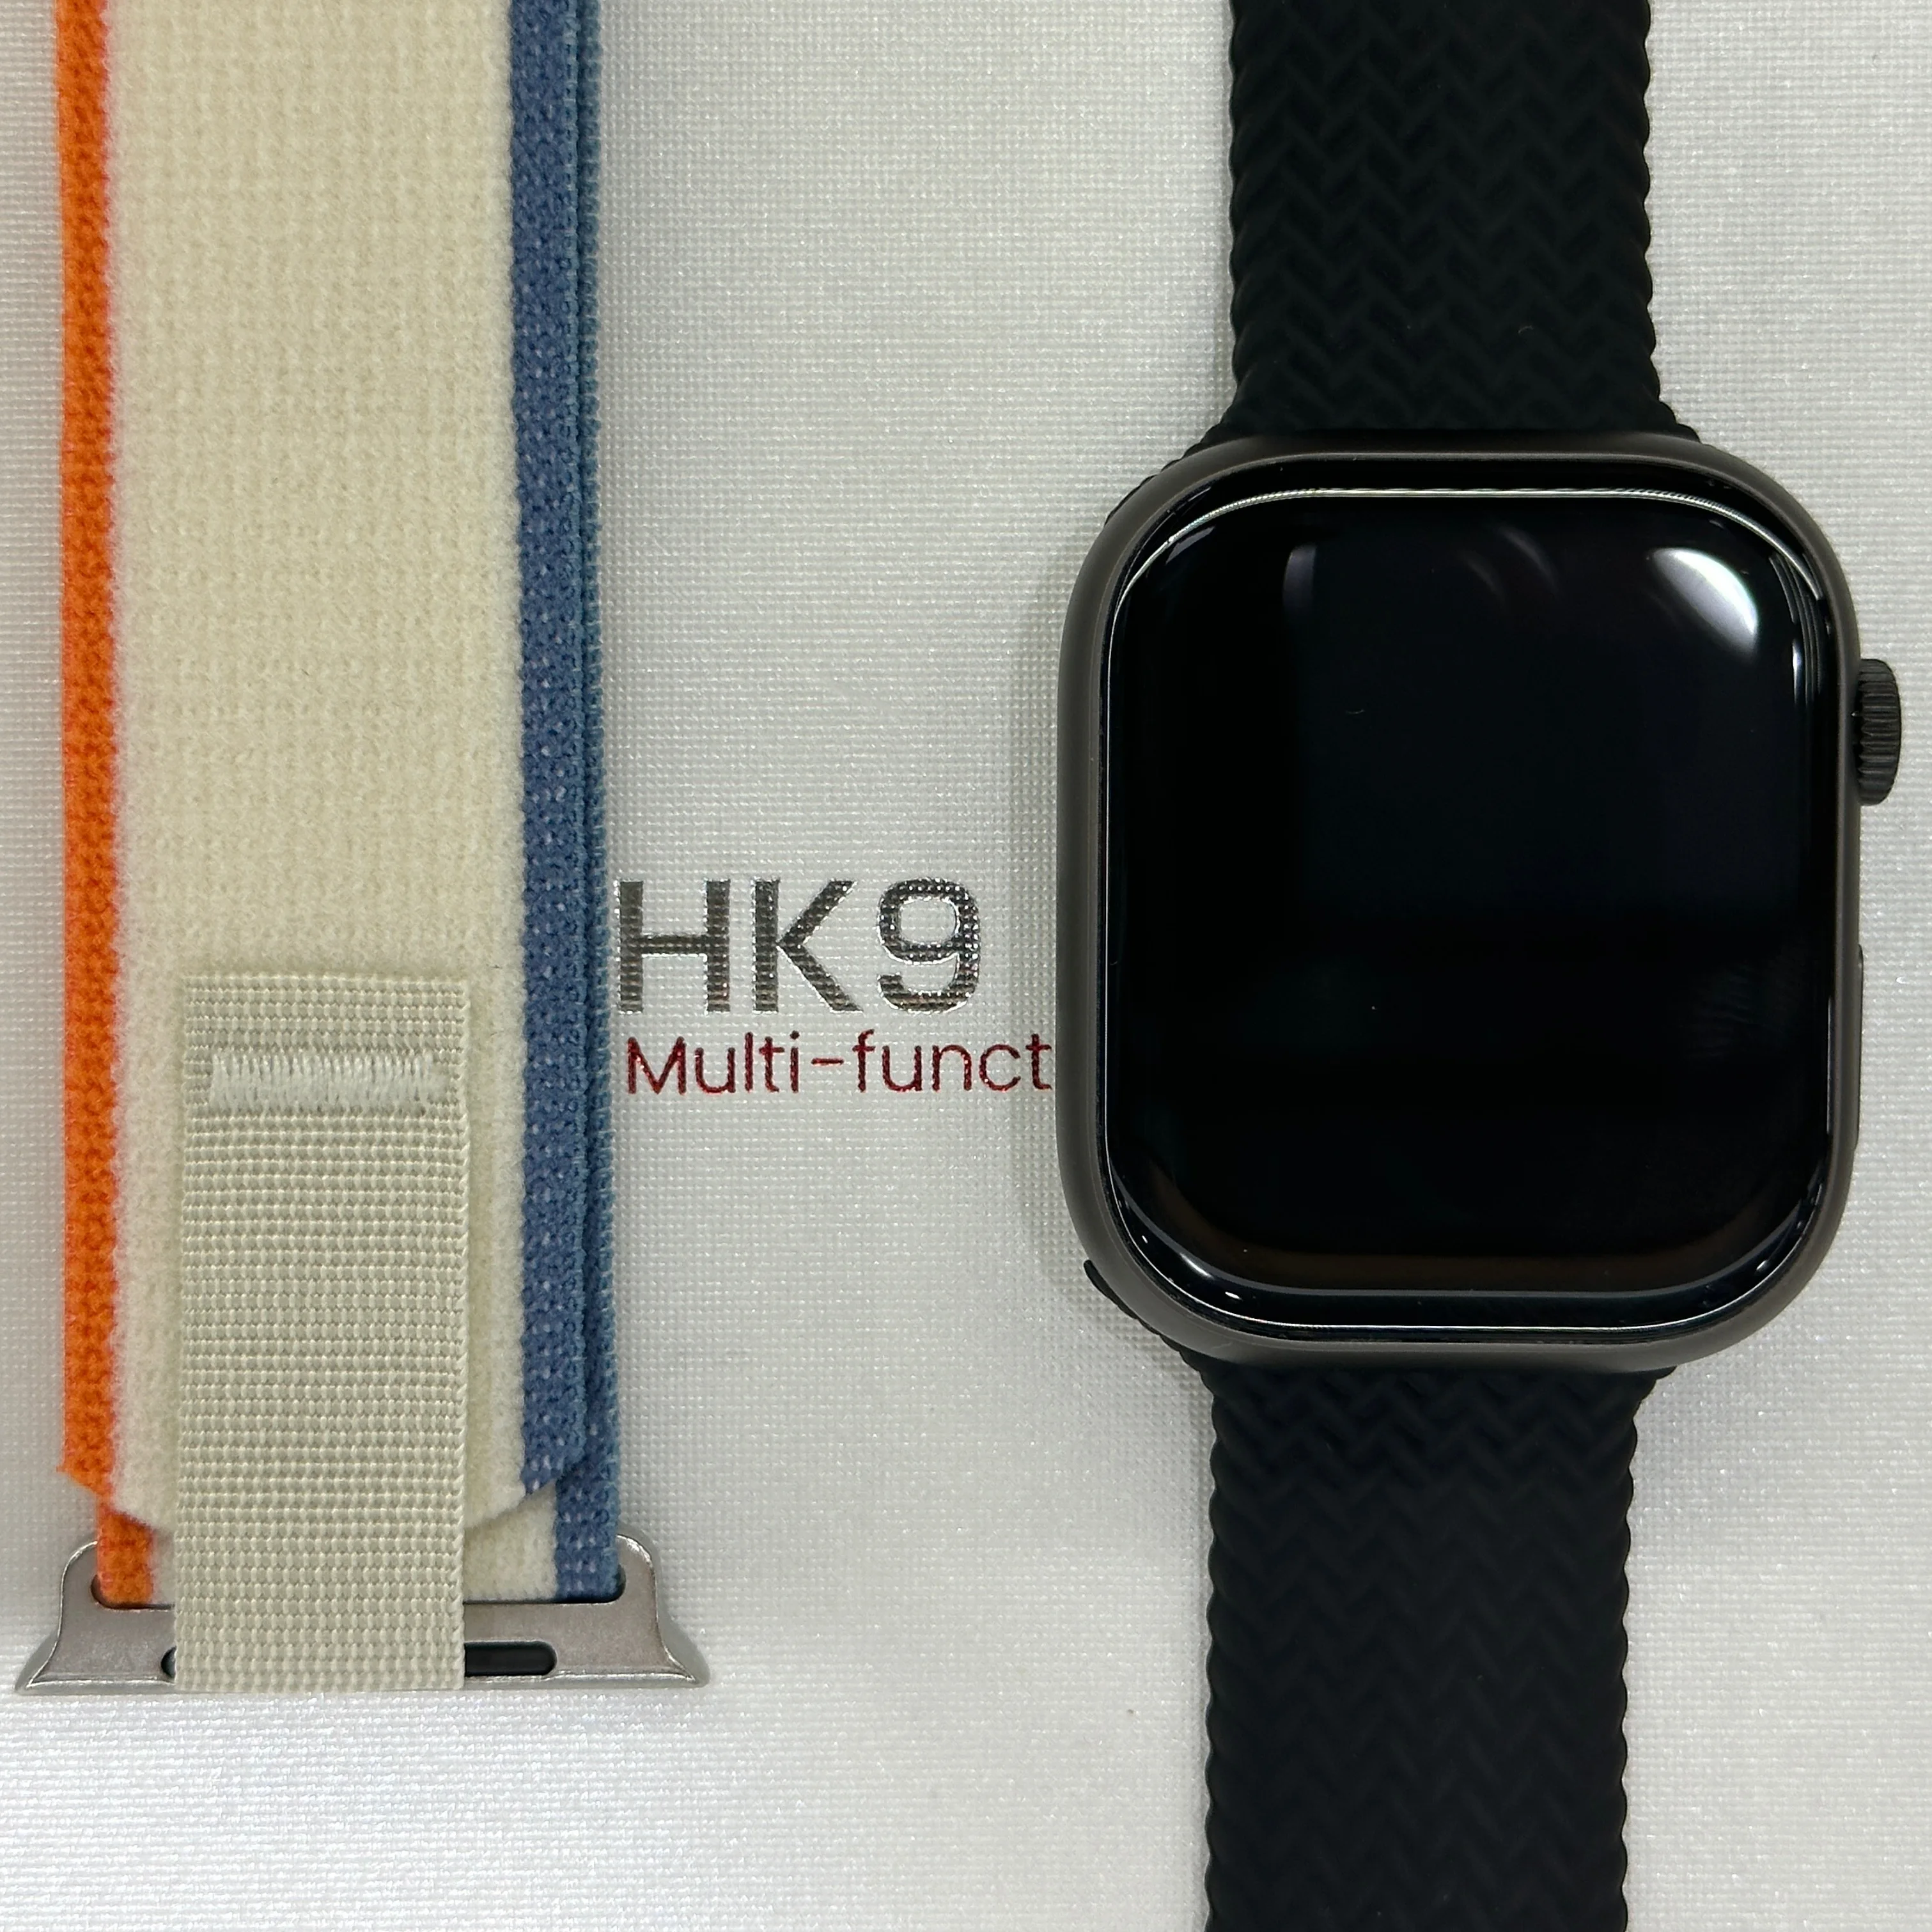 HK9 ultra2 gen2 smartwatch amoled display Relog Intelligent Chat GPT - Ex  And Next